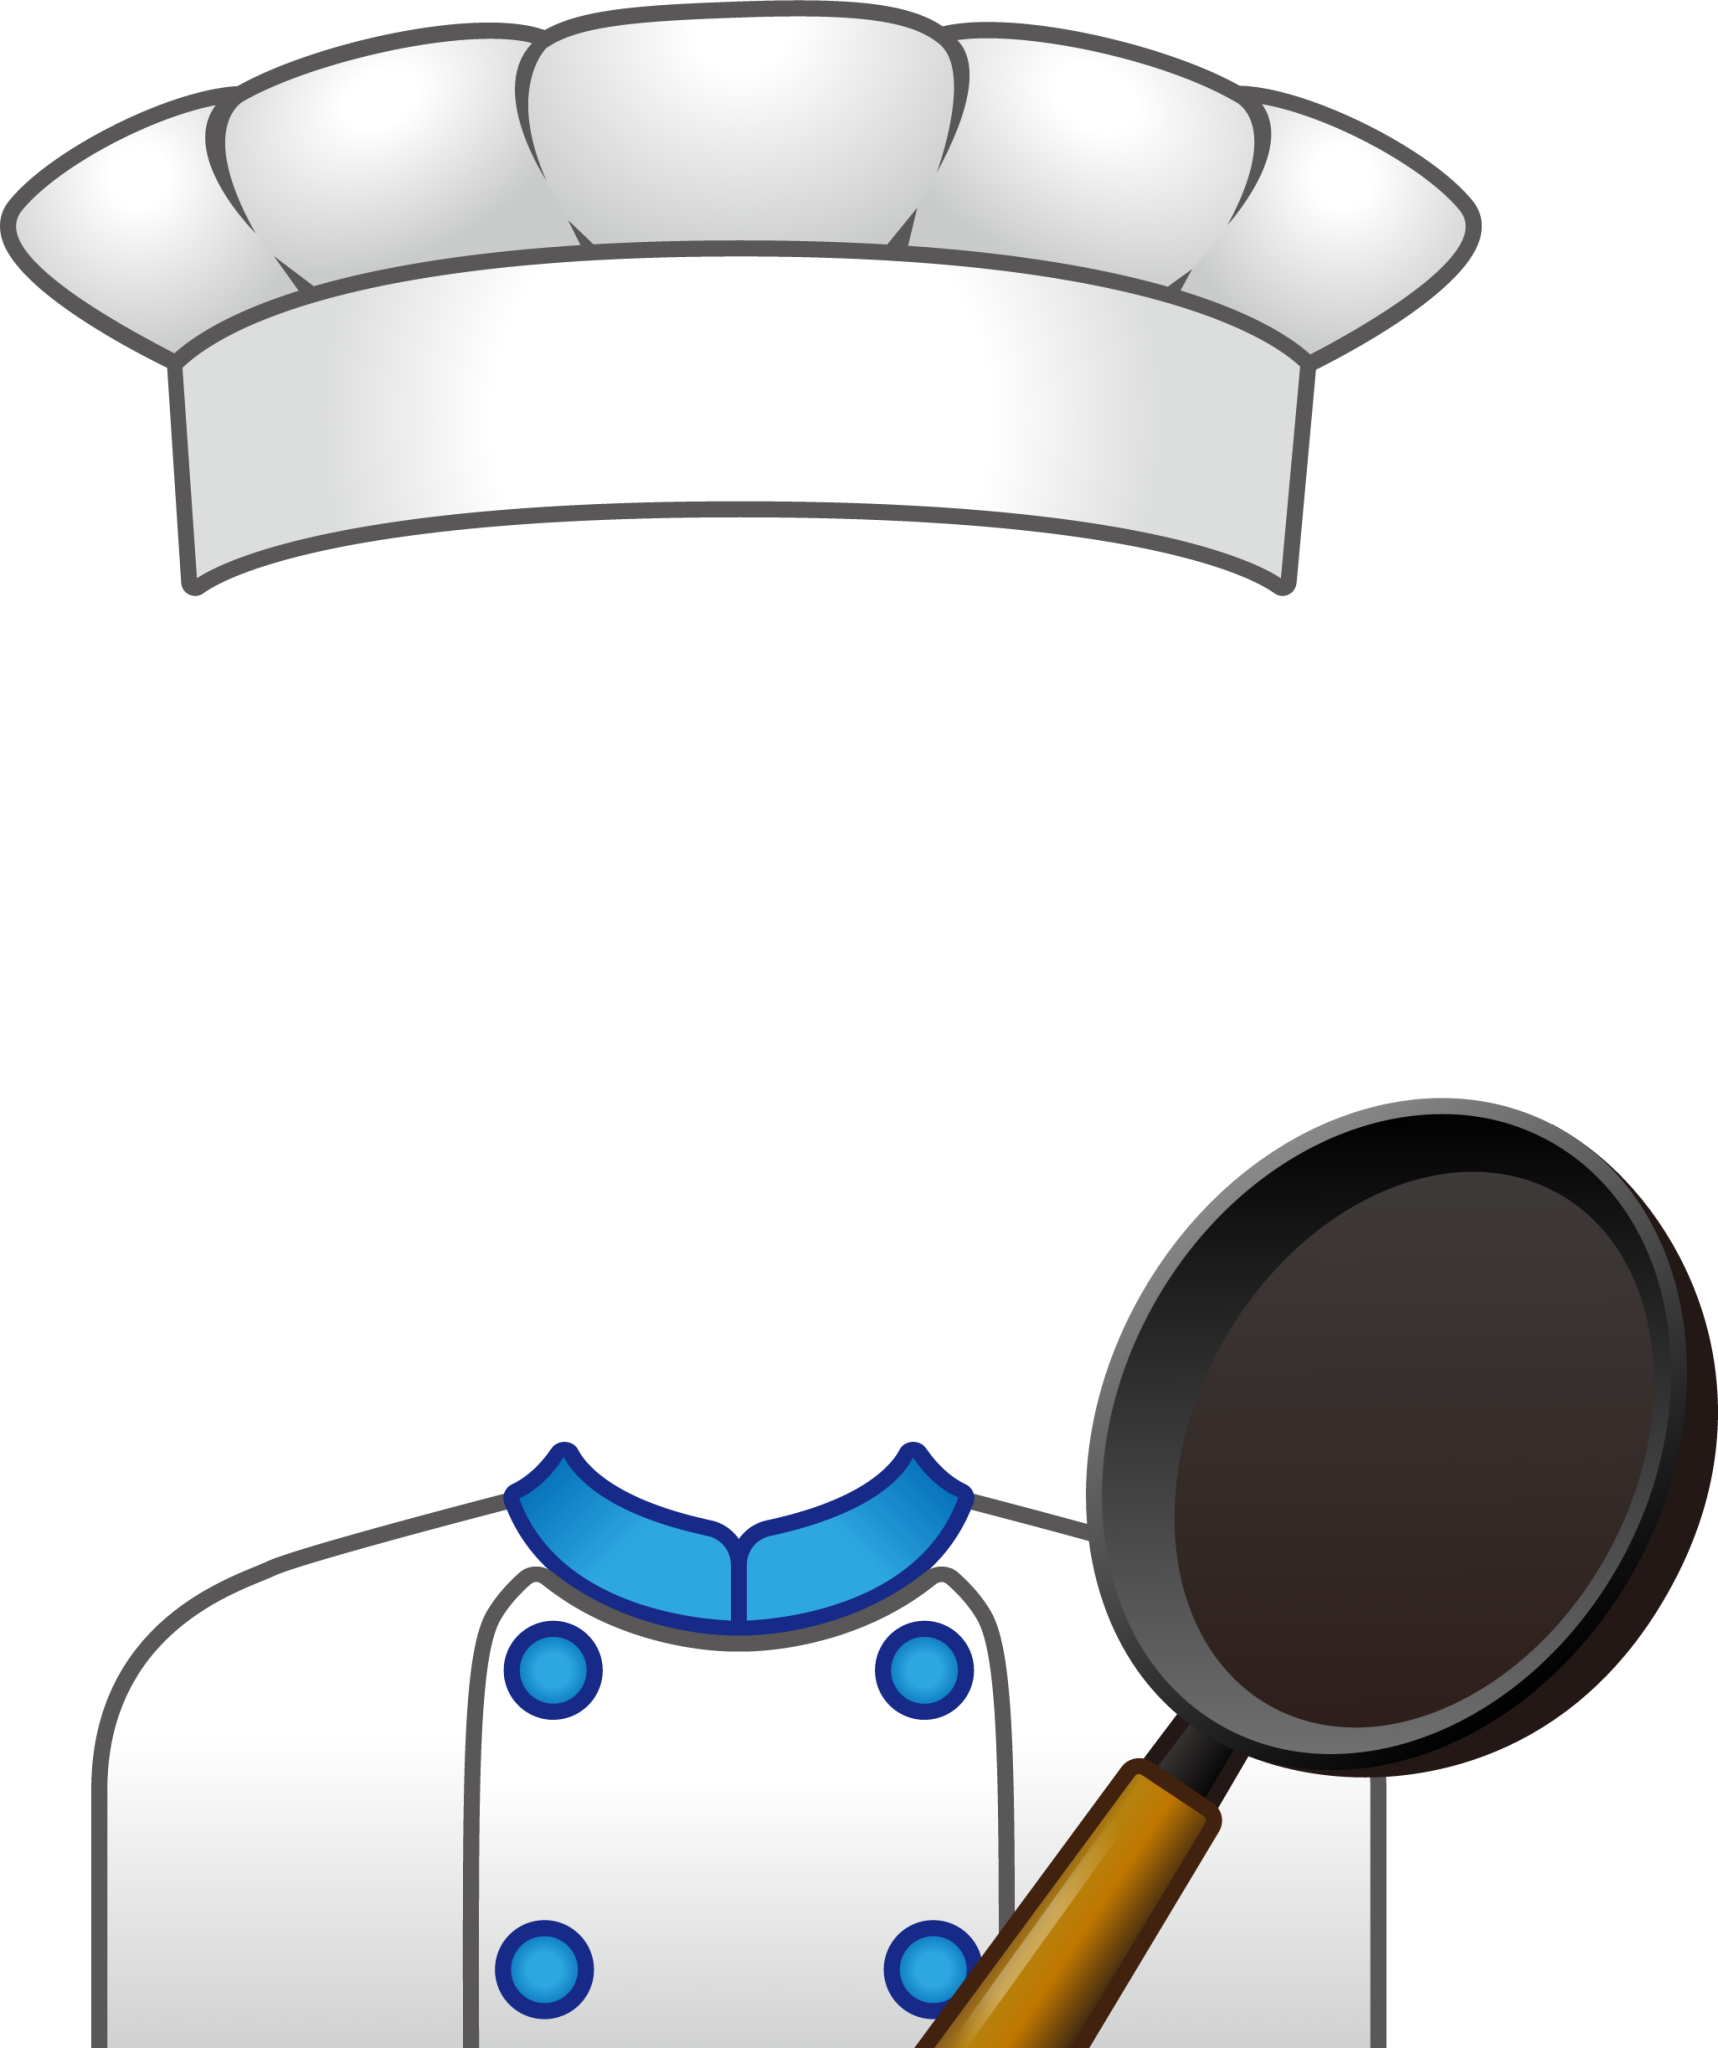 cook emoji